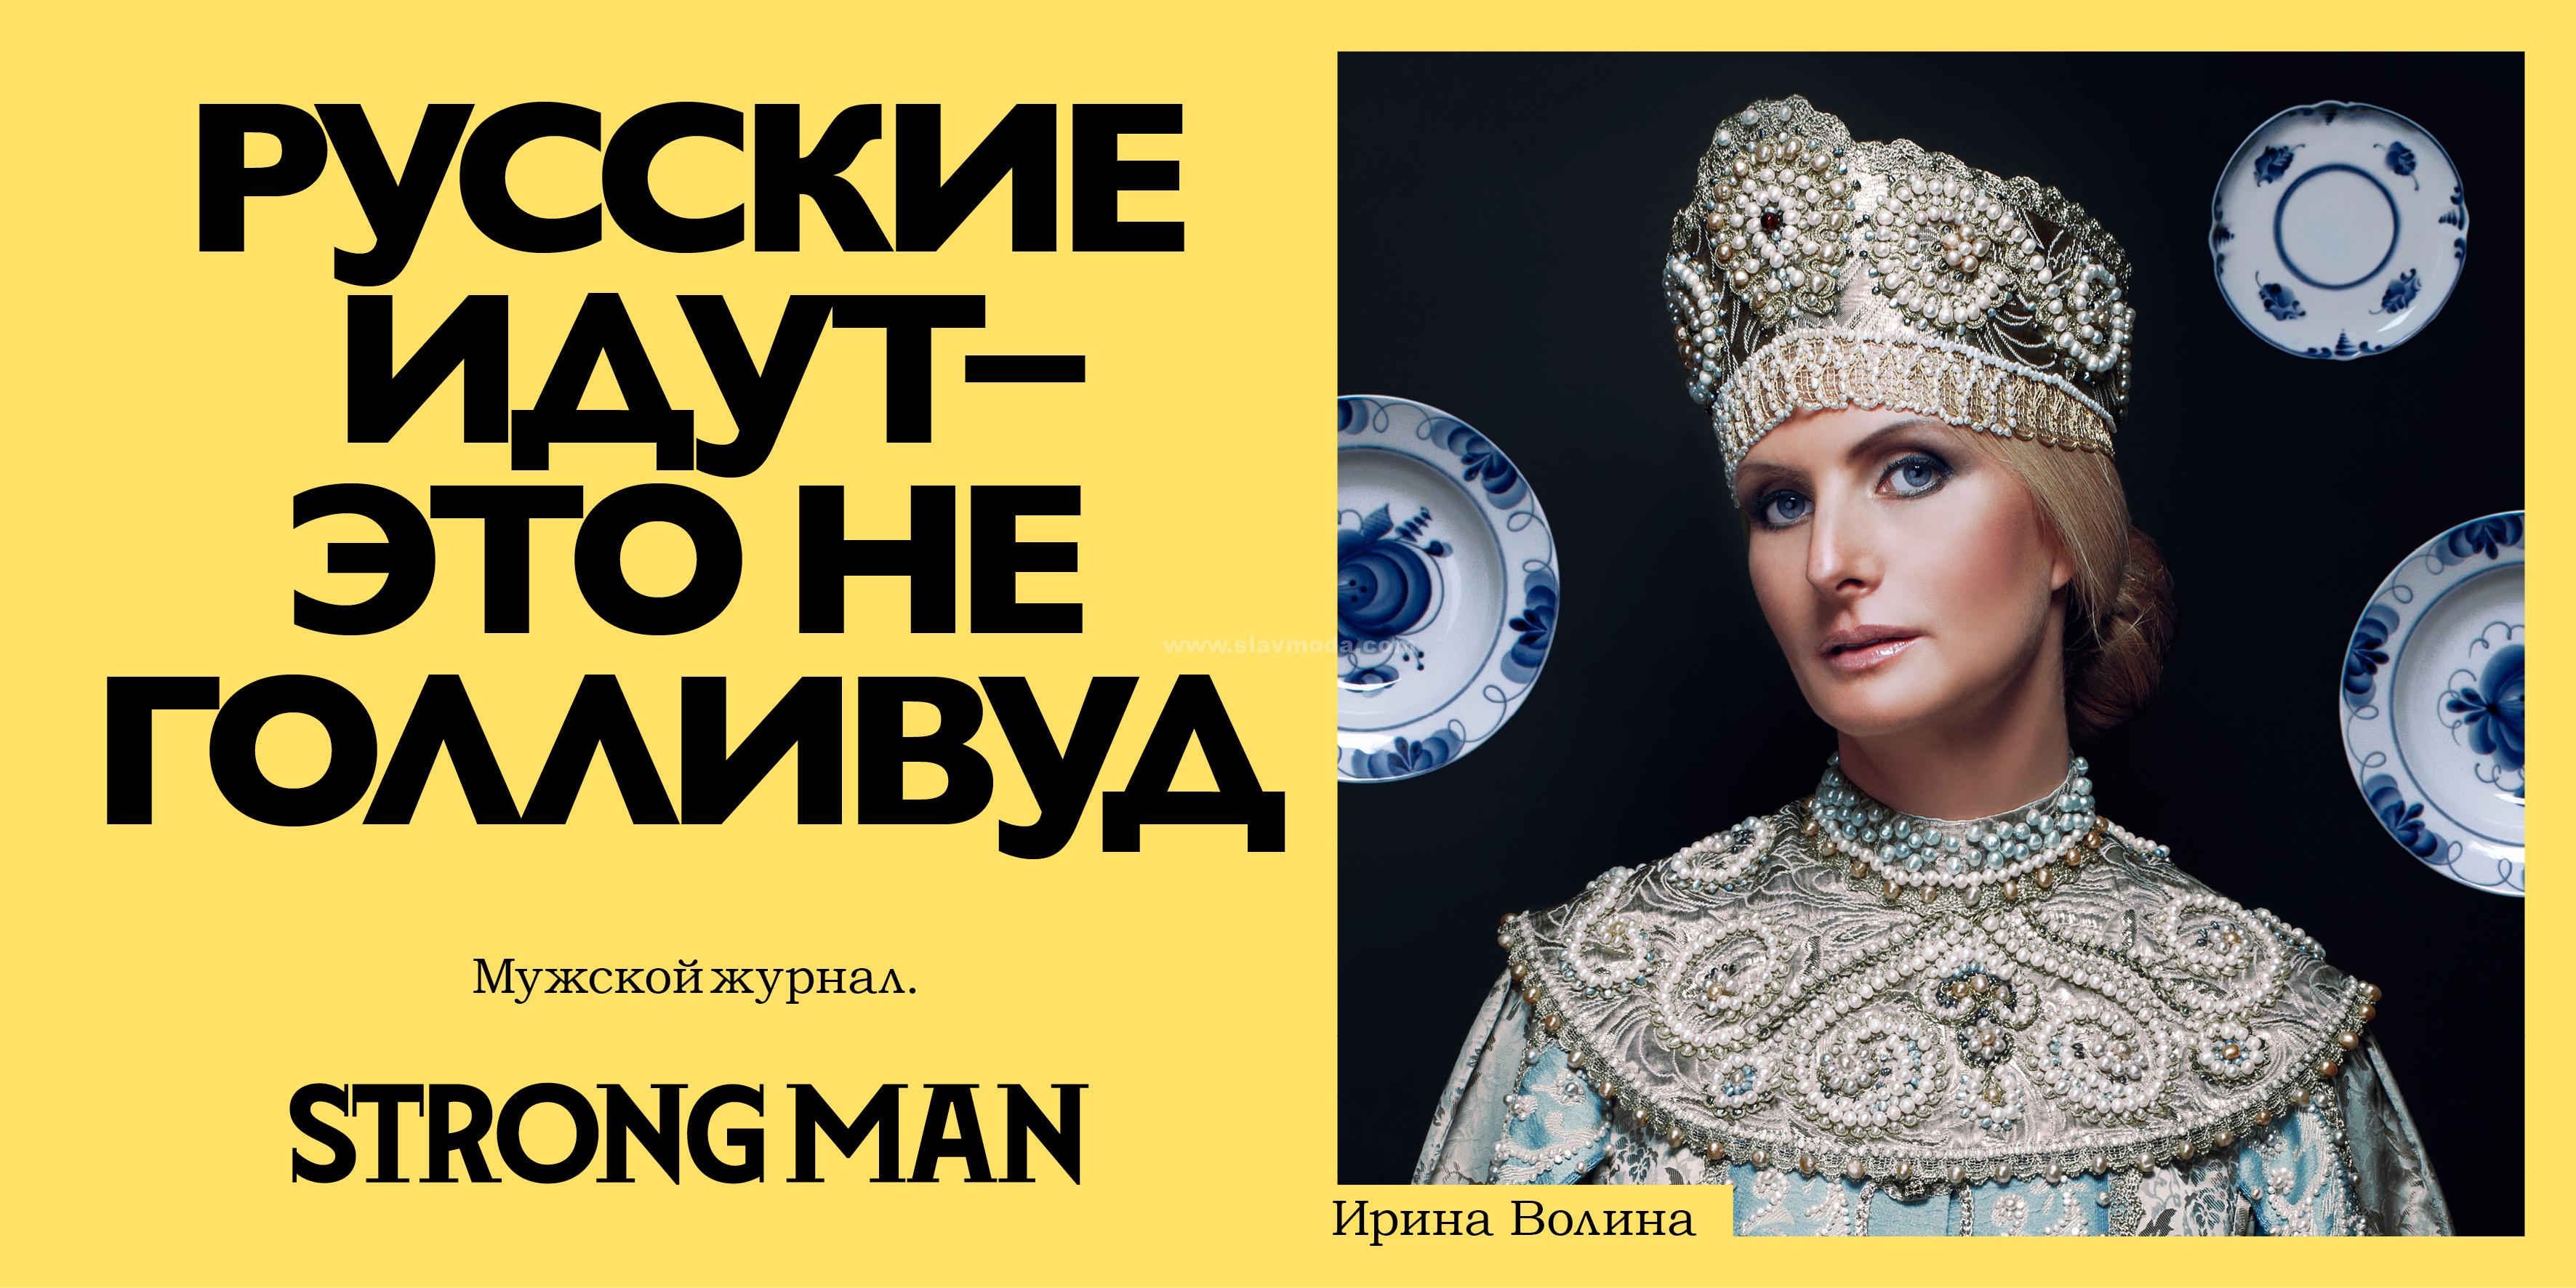 Ирина Волина на обложке журнала в русском костюме 